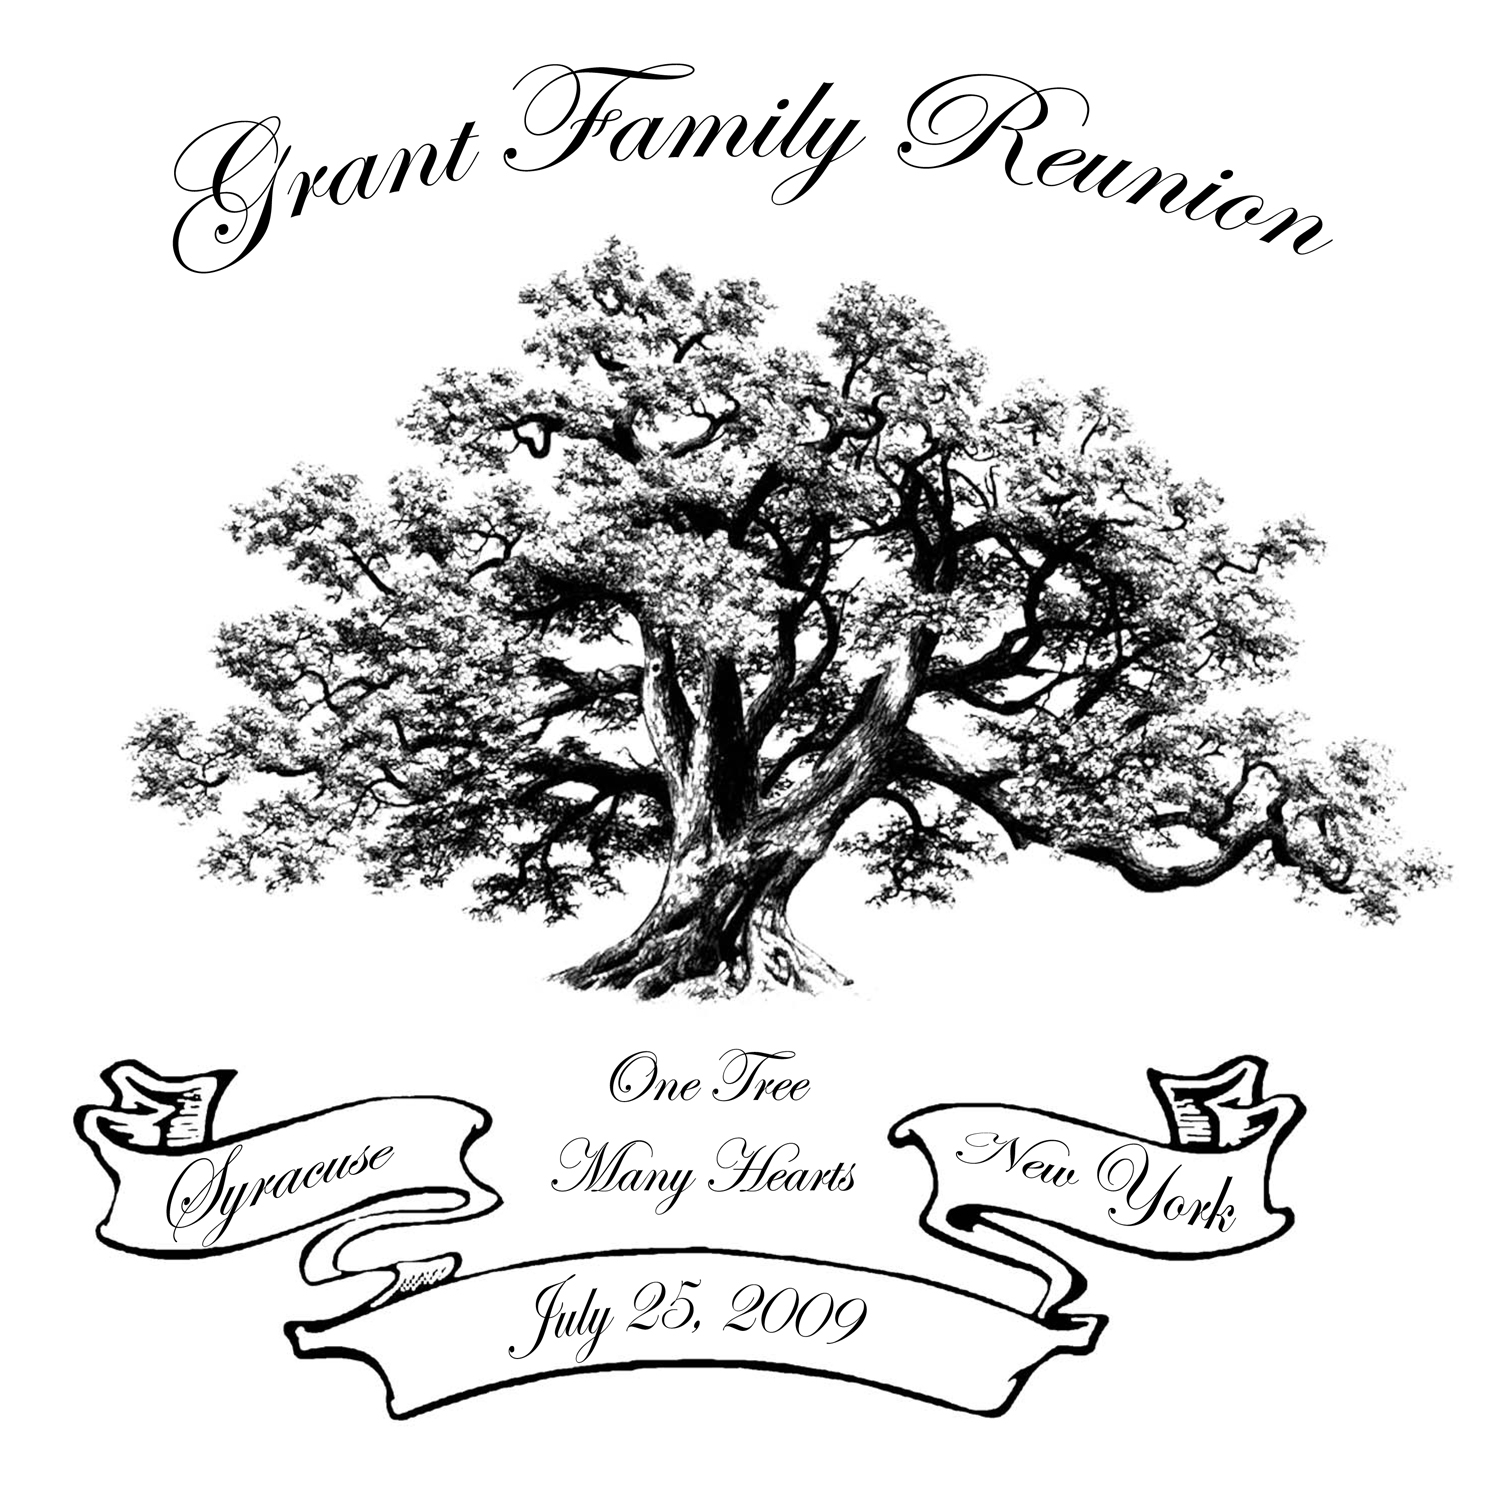 Grant Family Reunion